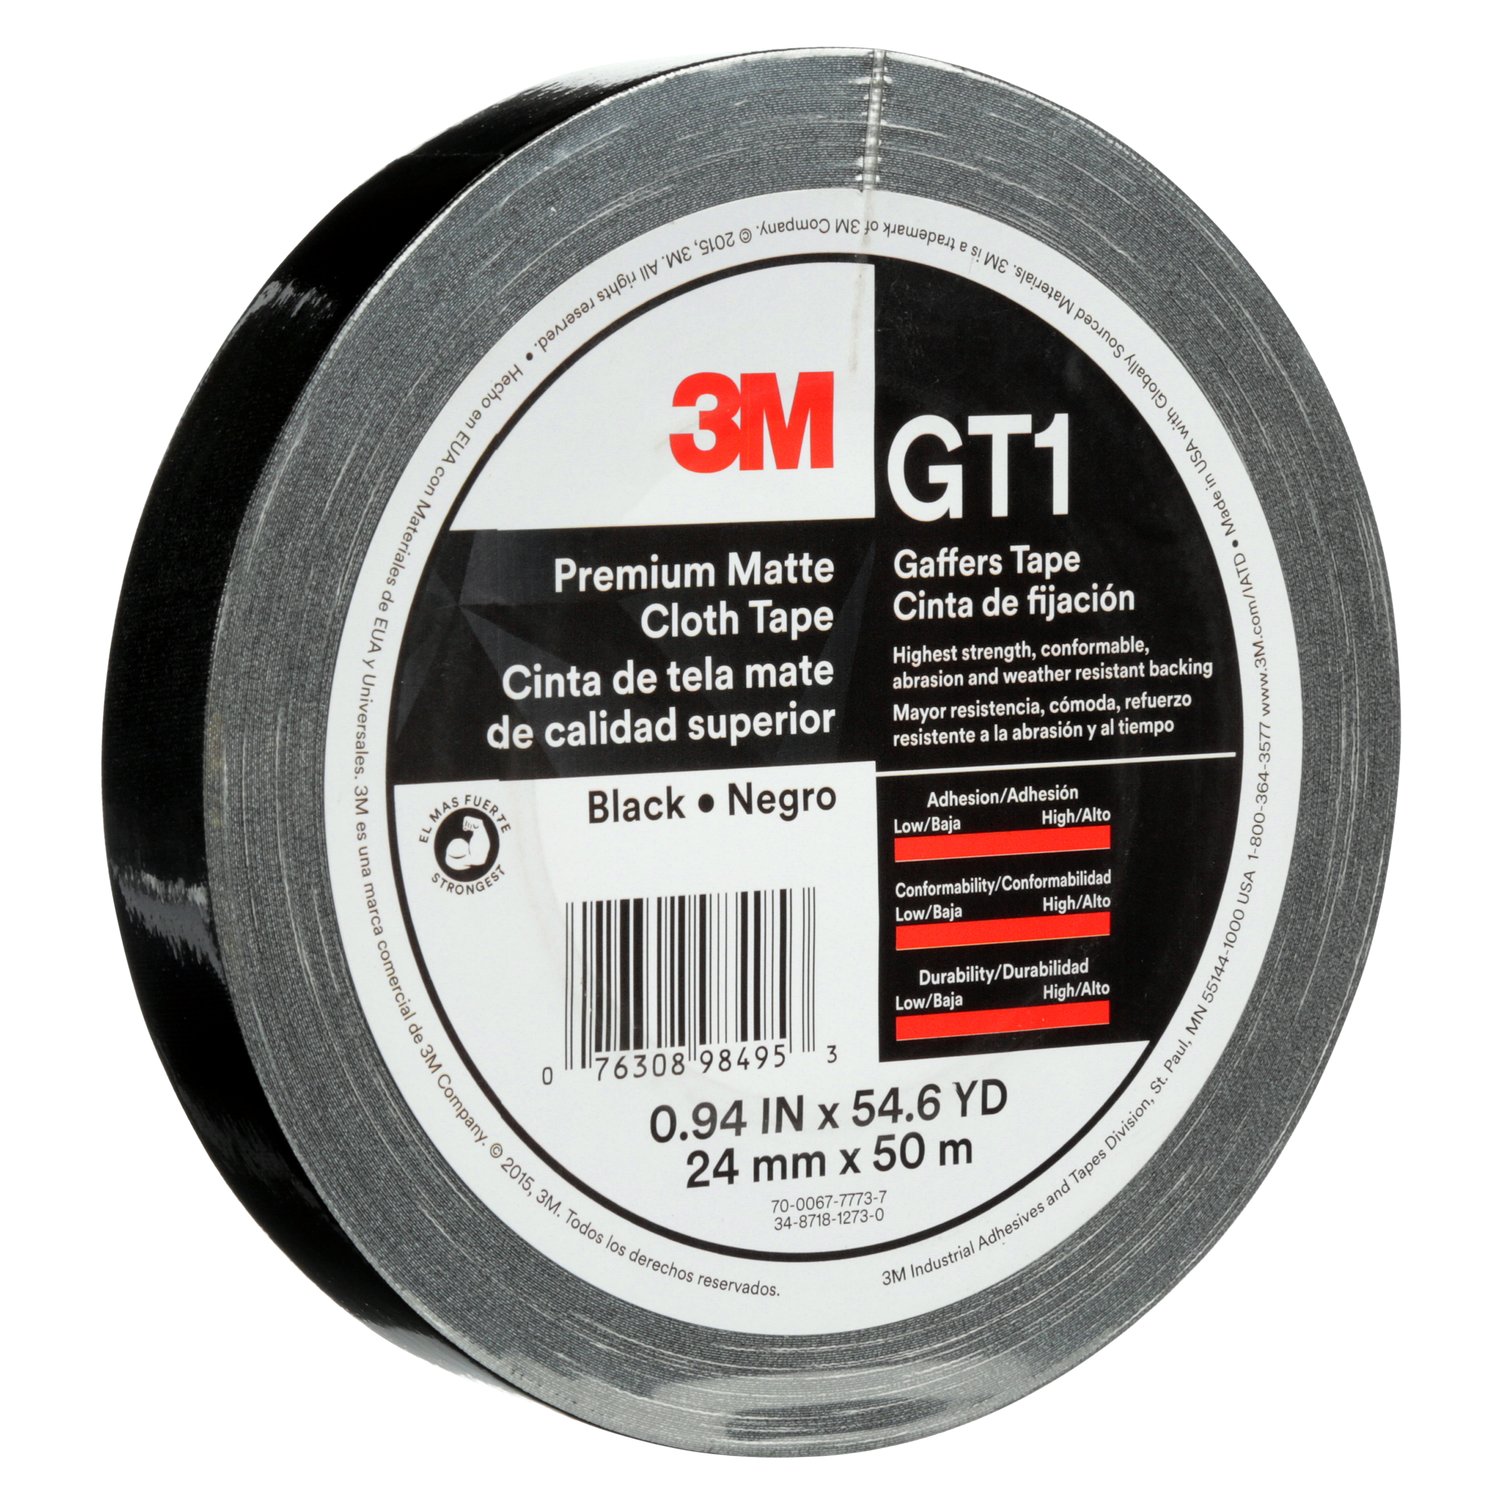 7010312513 - 3M Premium Matte Cloth (Gaffers) Tape GT1, Black, 24 mm x 50 m, 11 mil,
48/Case